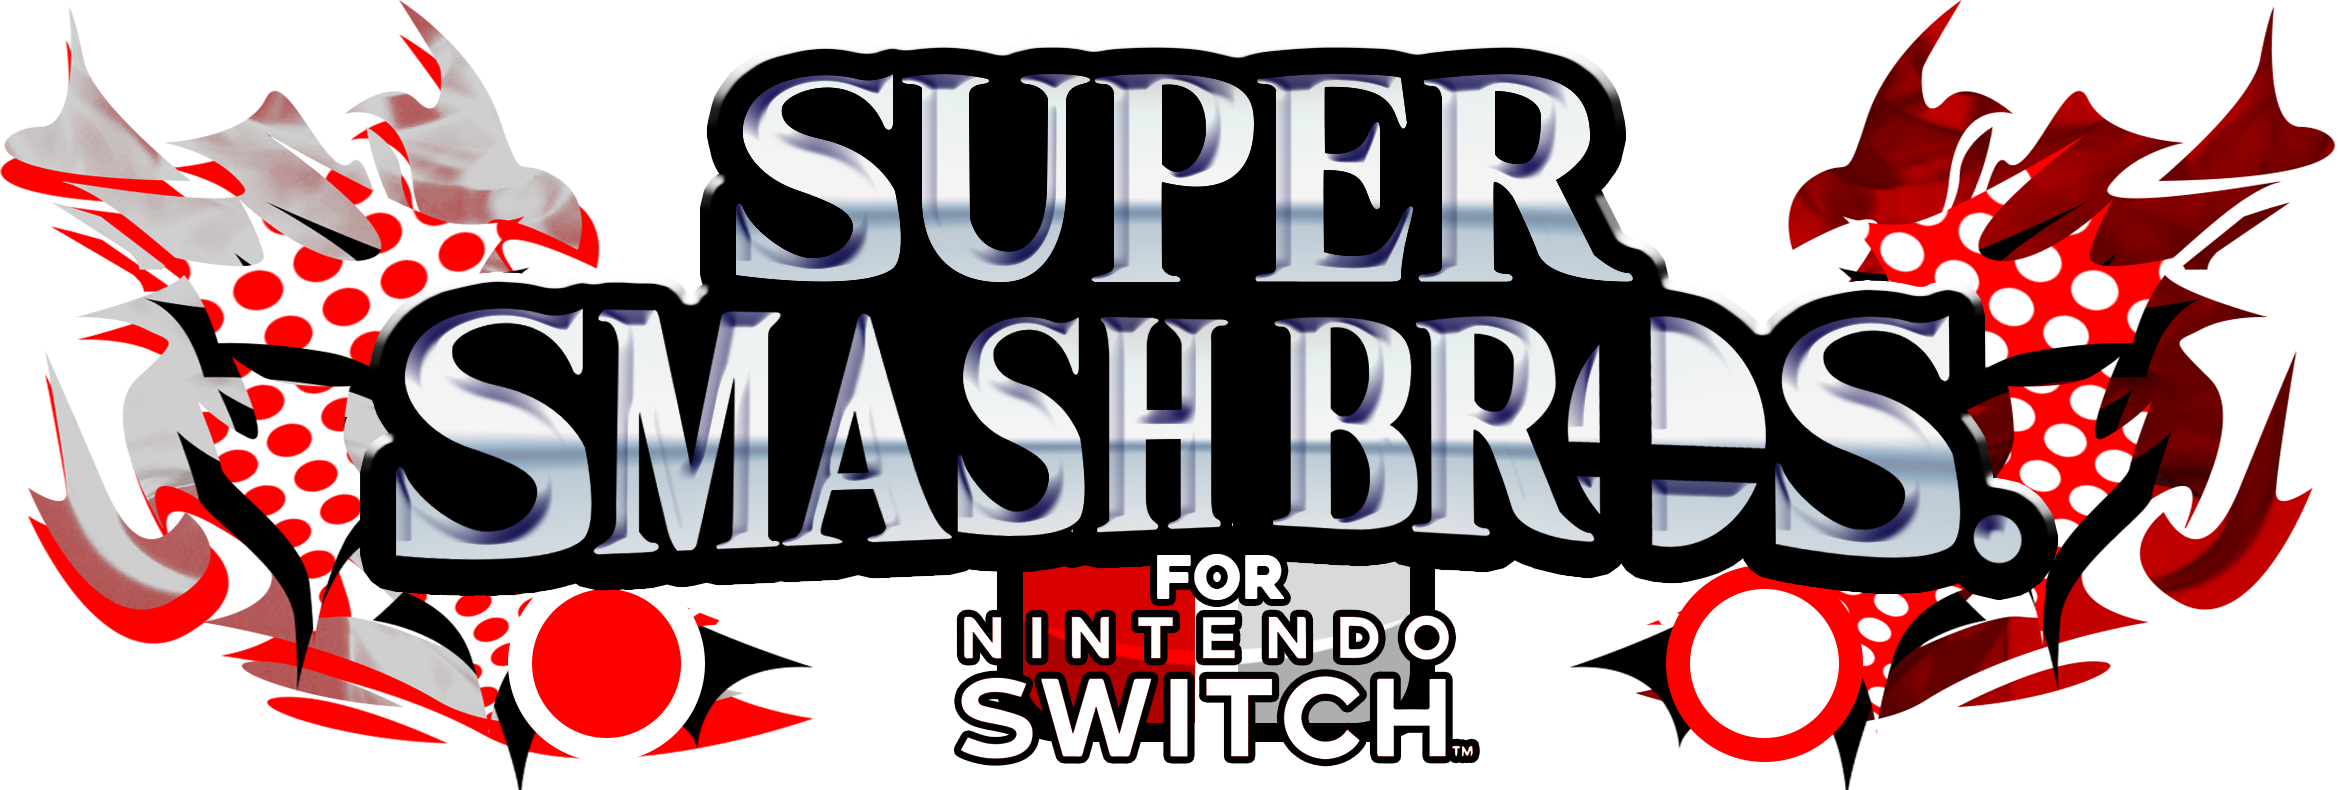 nintendo switch with super smash bros